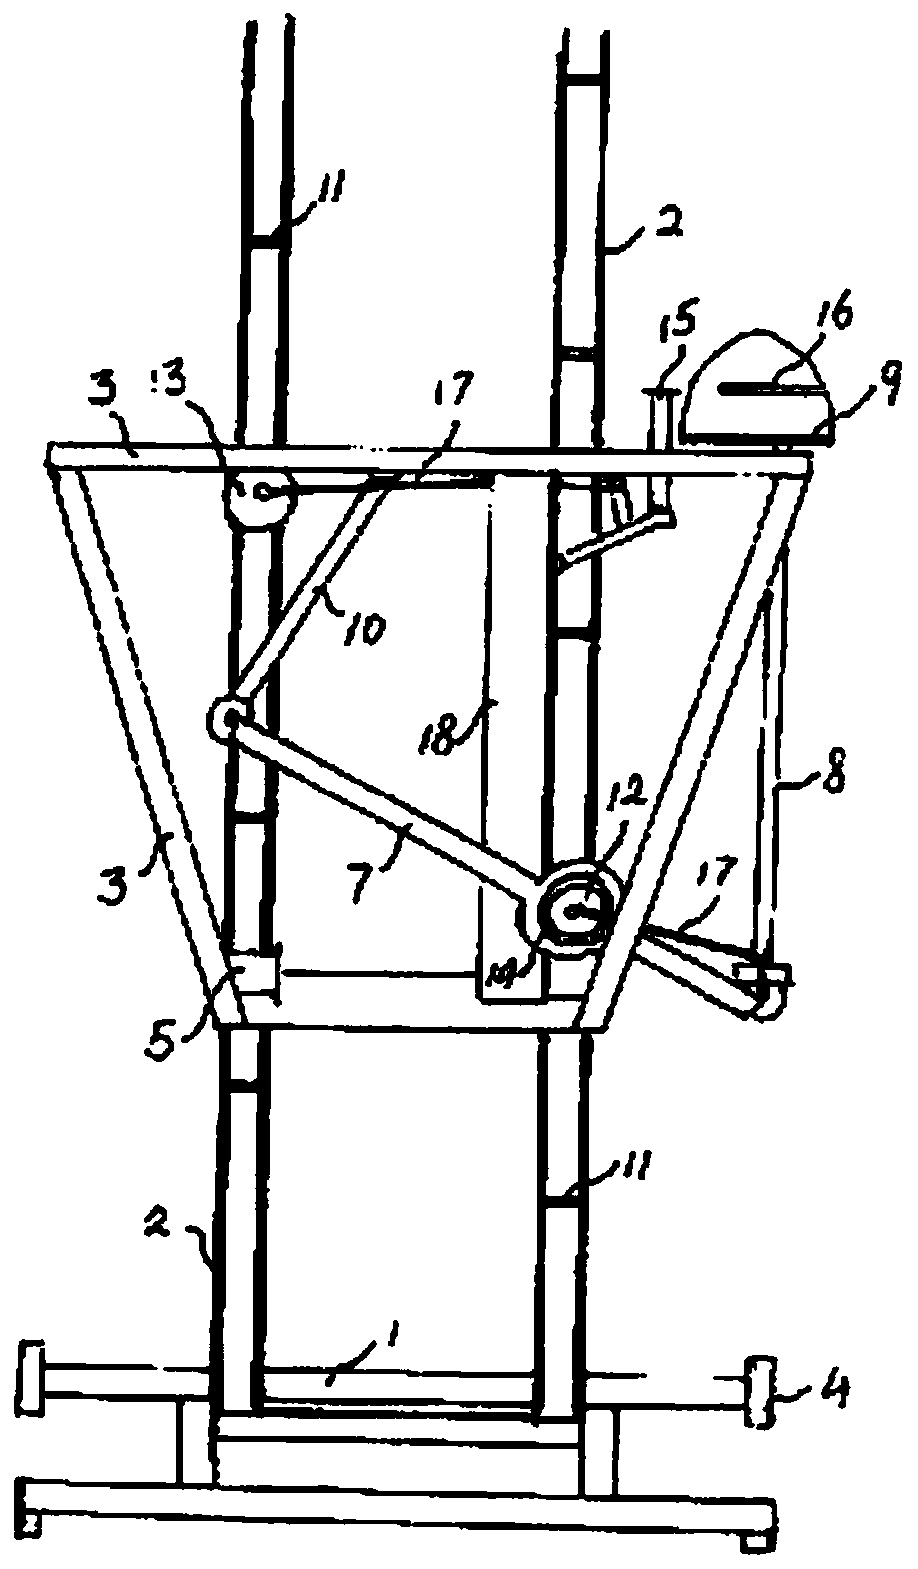 Stilts-type lifting device